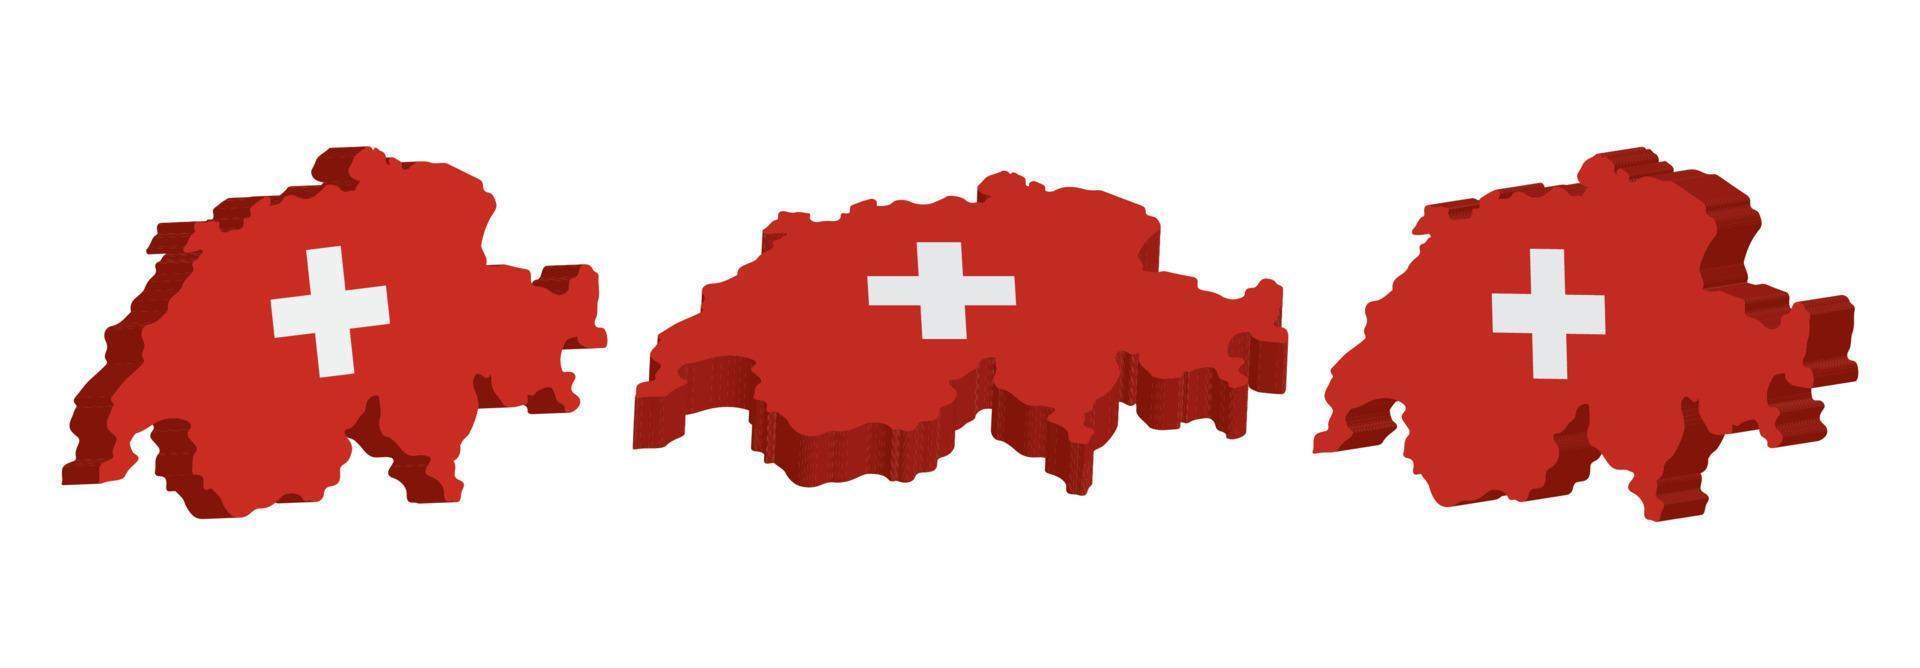 Realistic 3D Map of Switzerland Vector Design Template